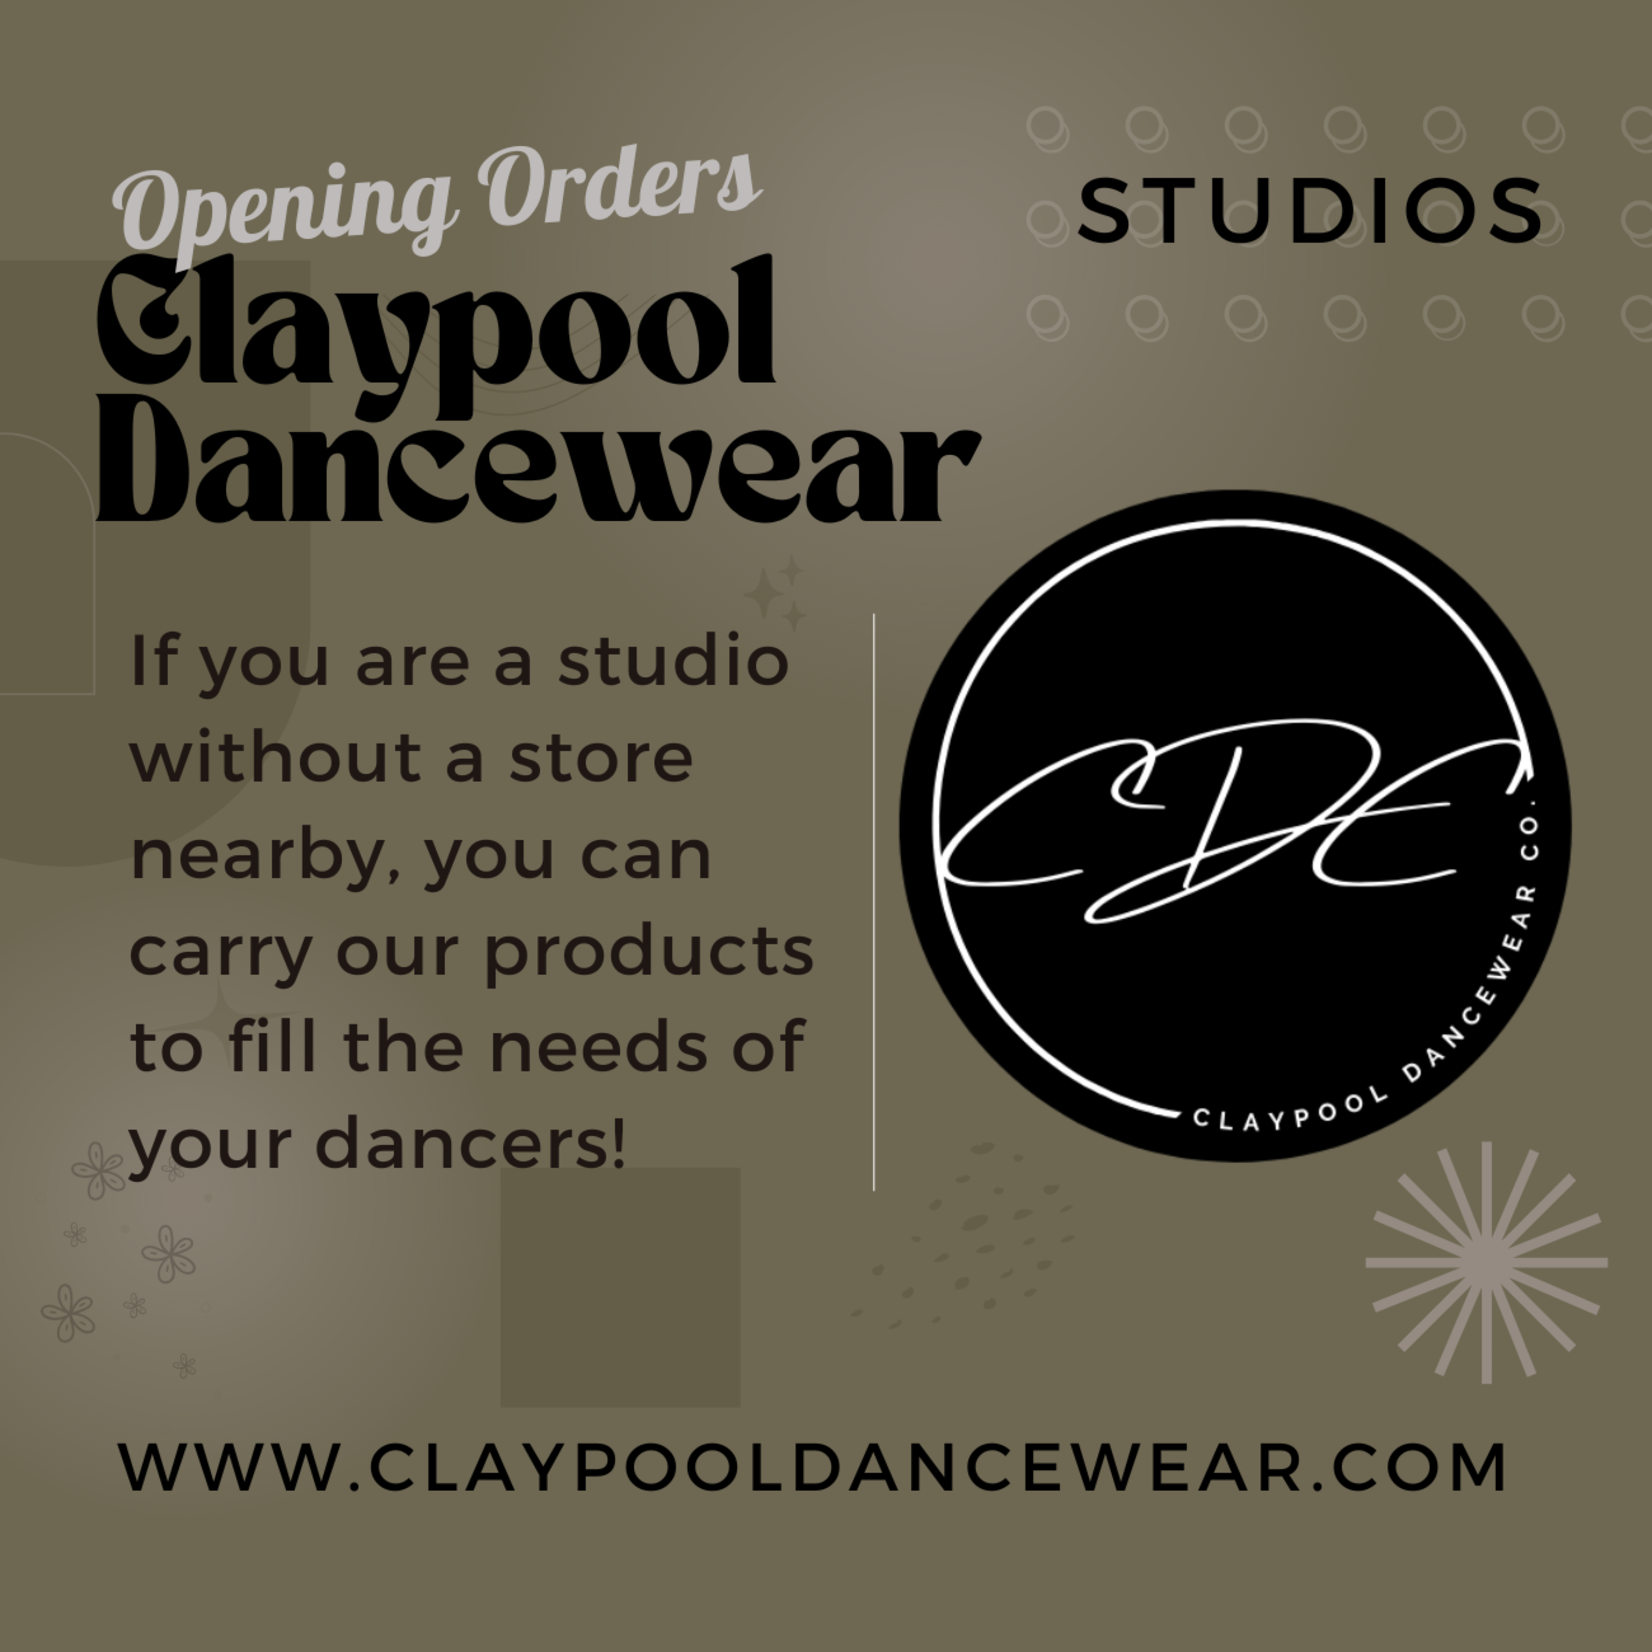 Claypool Dancewear Company Studio Opening Order